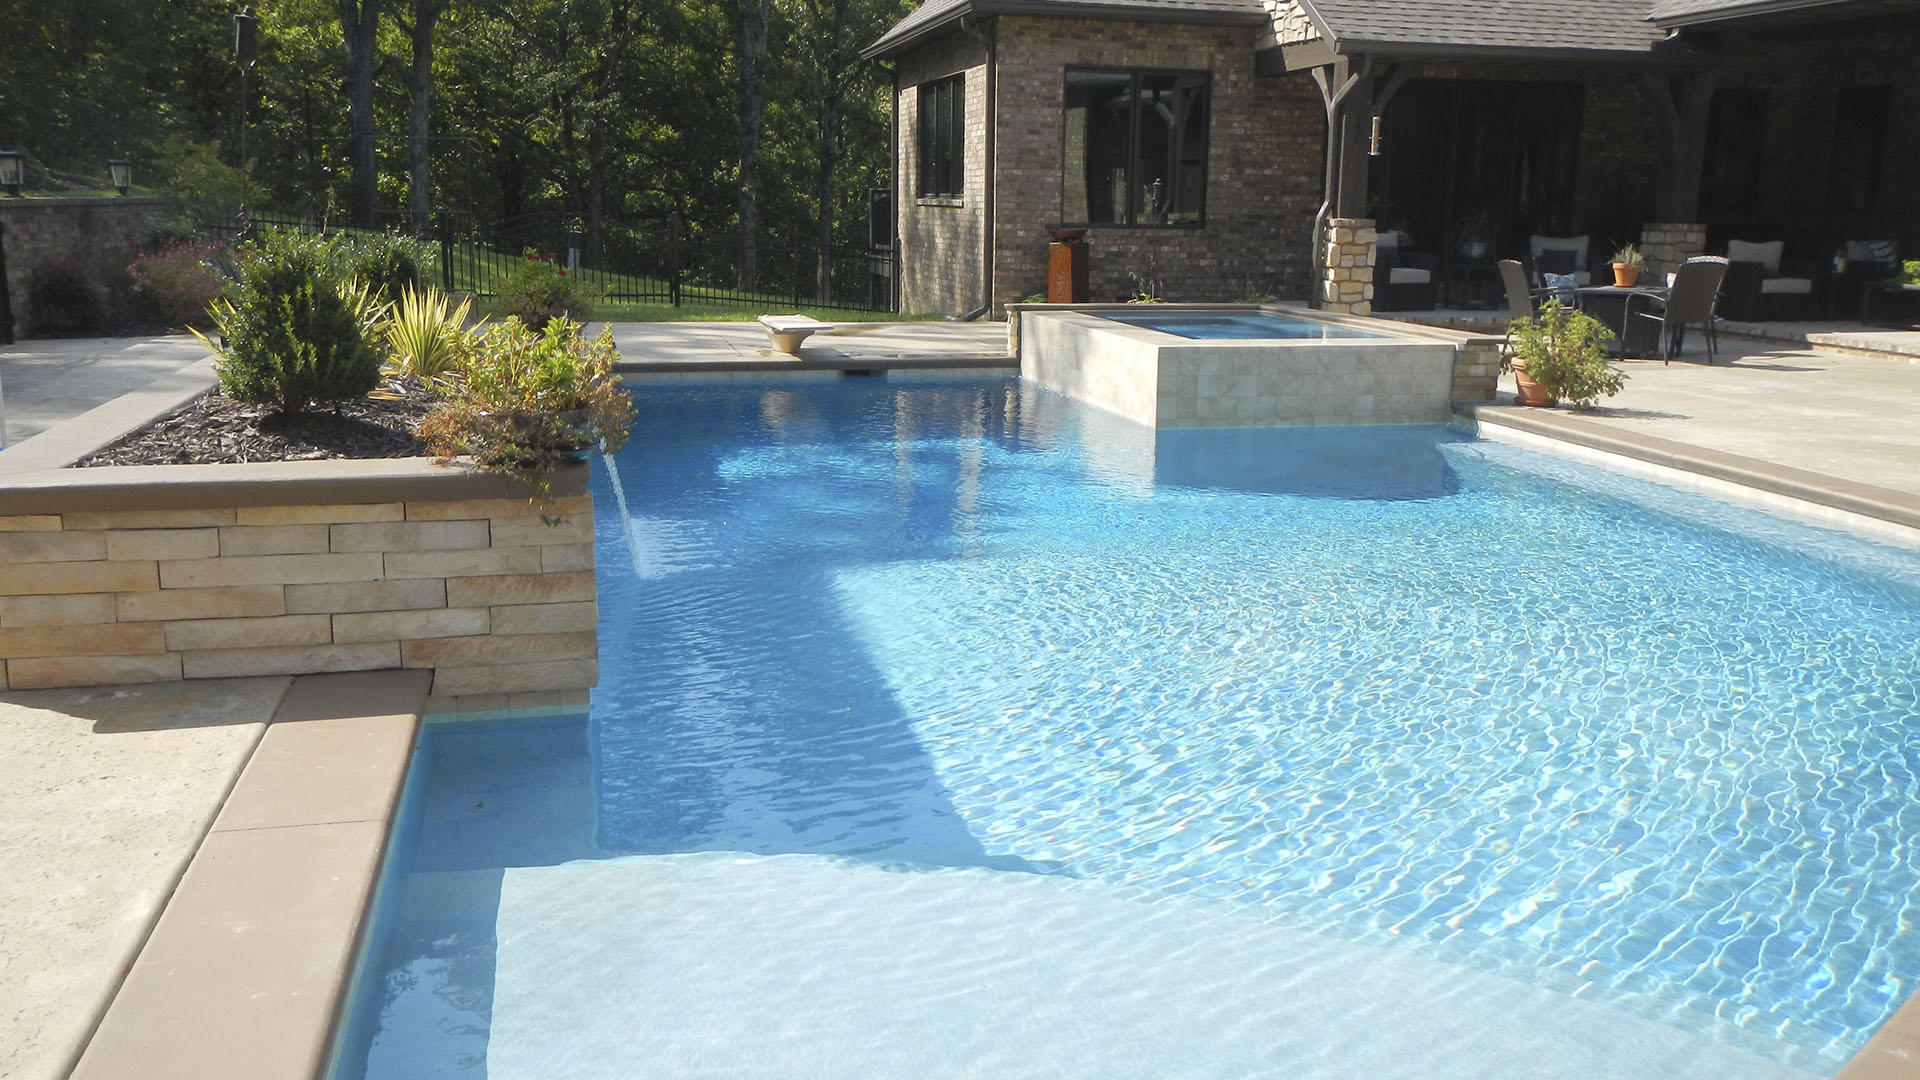 Clark & Sons Pools - Luxury Pool Design